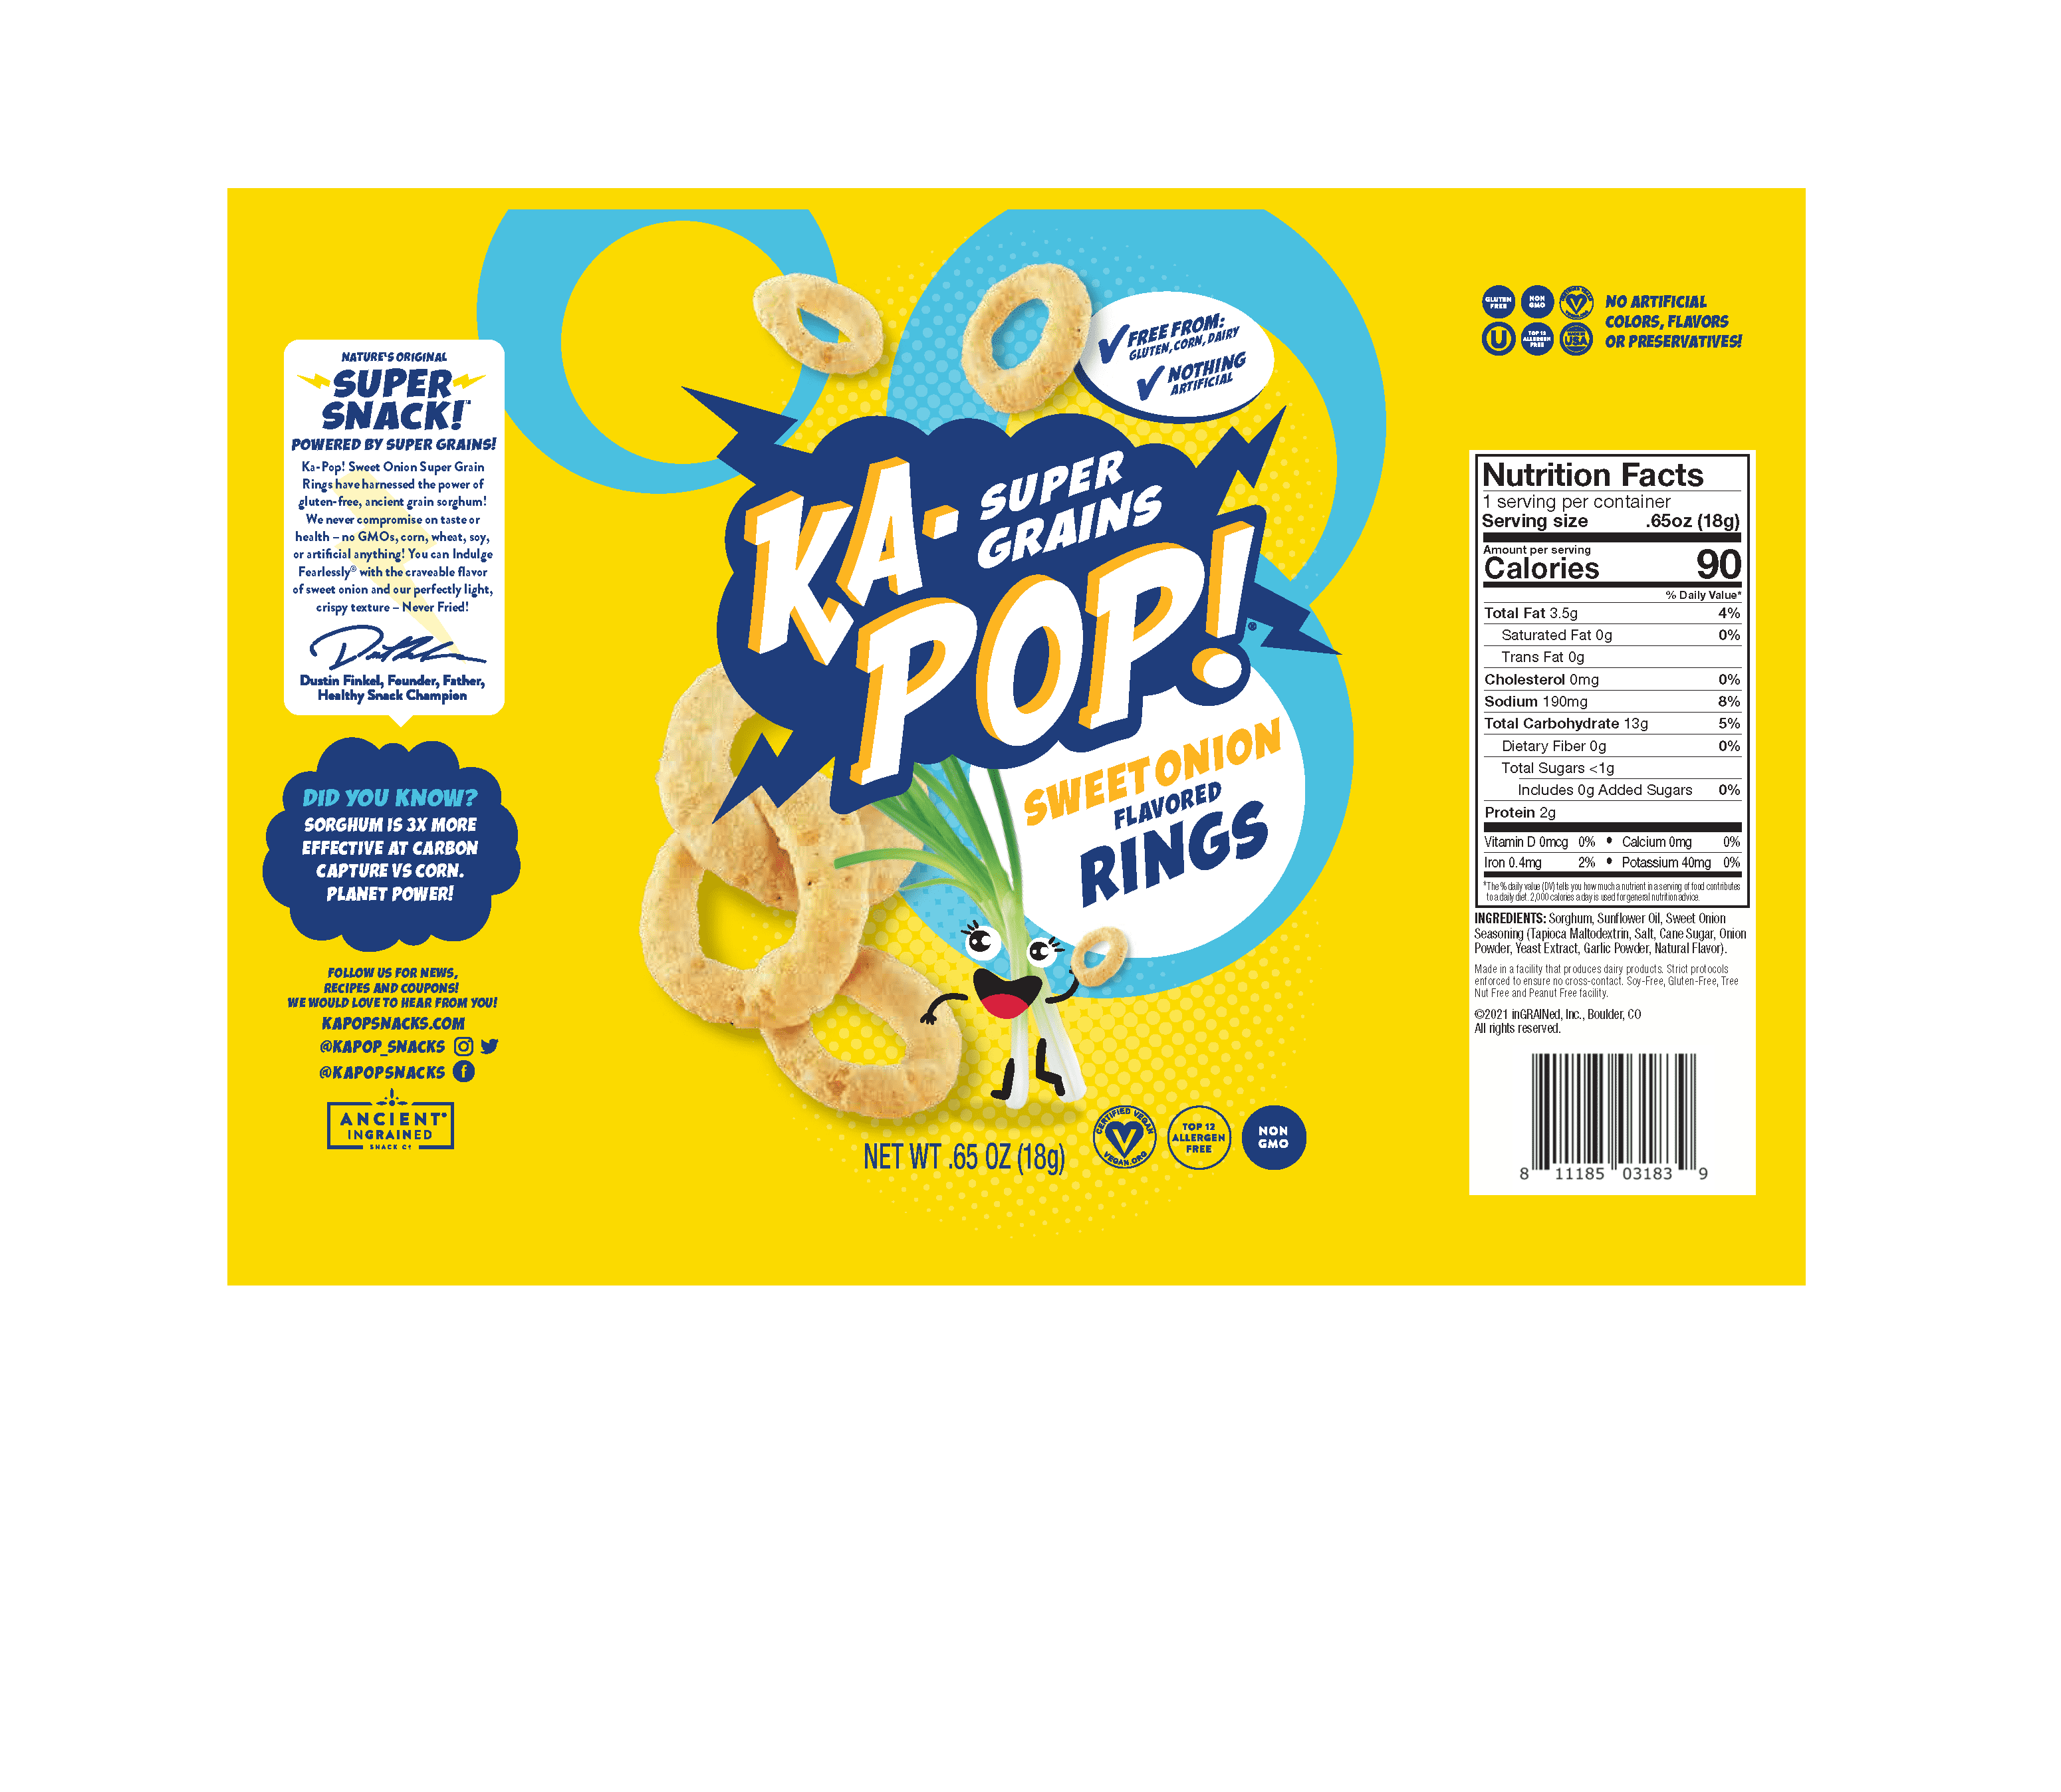 Ka-Pop! Sweet Onion Rings 24 units per case 0.7 oz Product Label